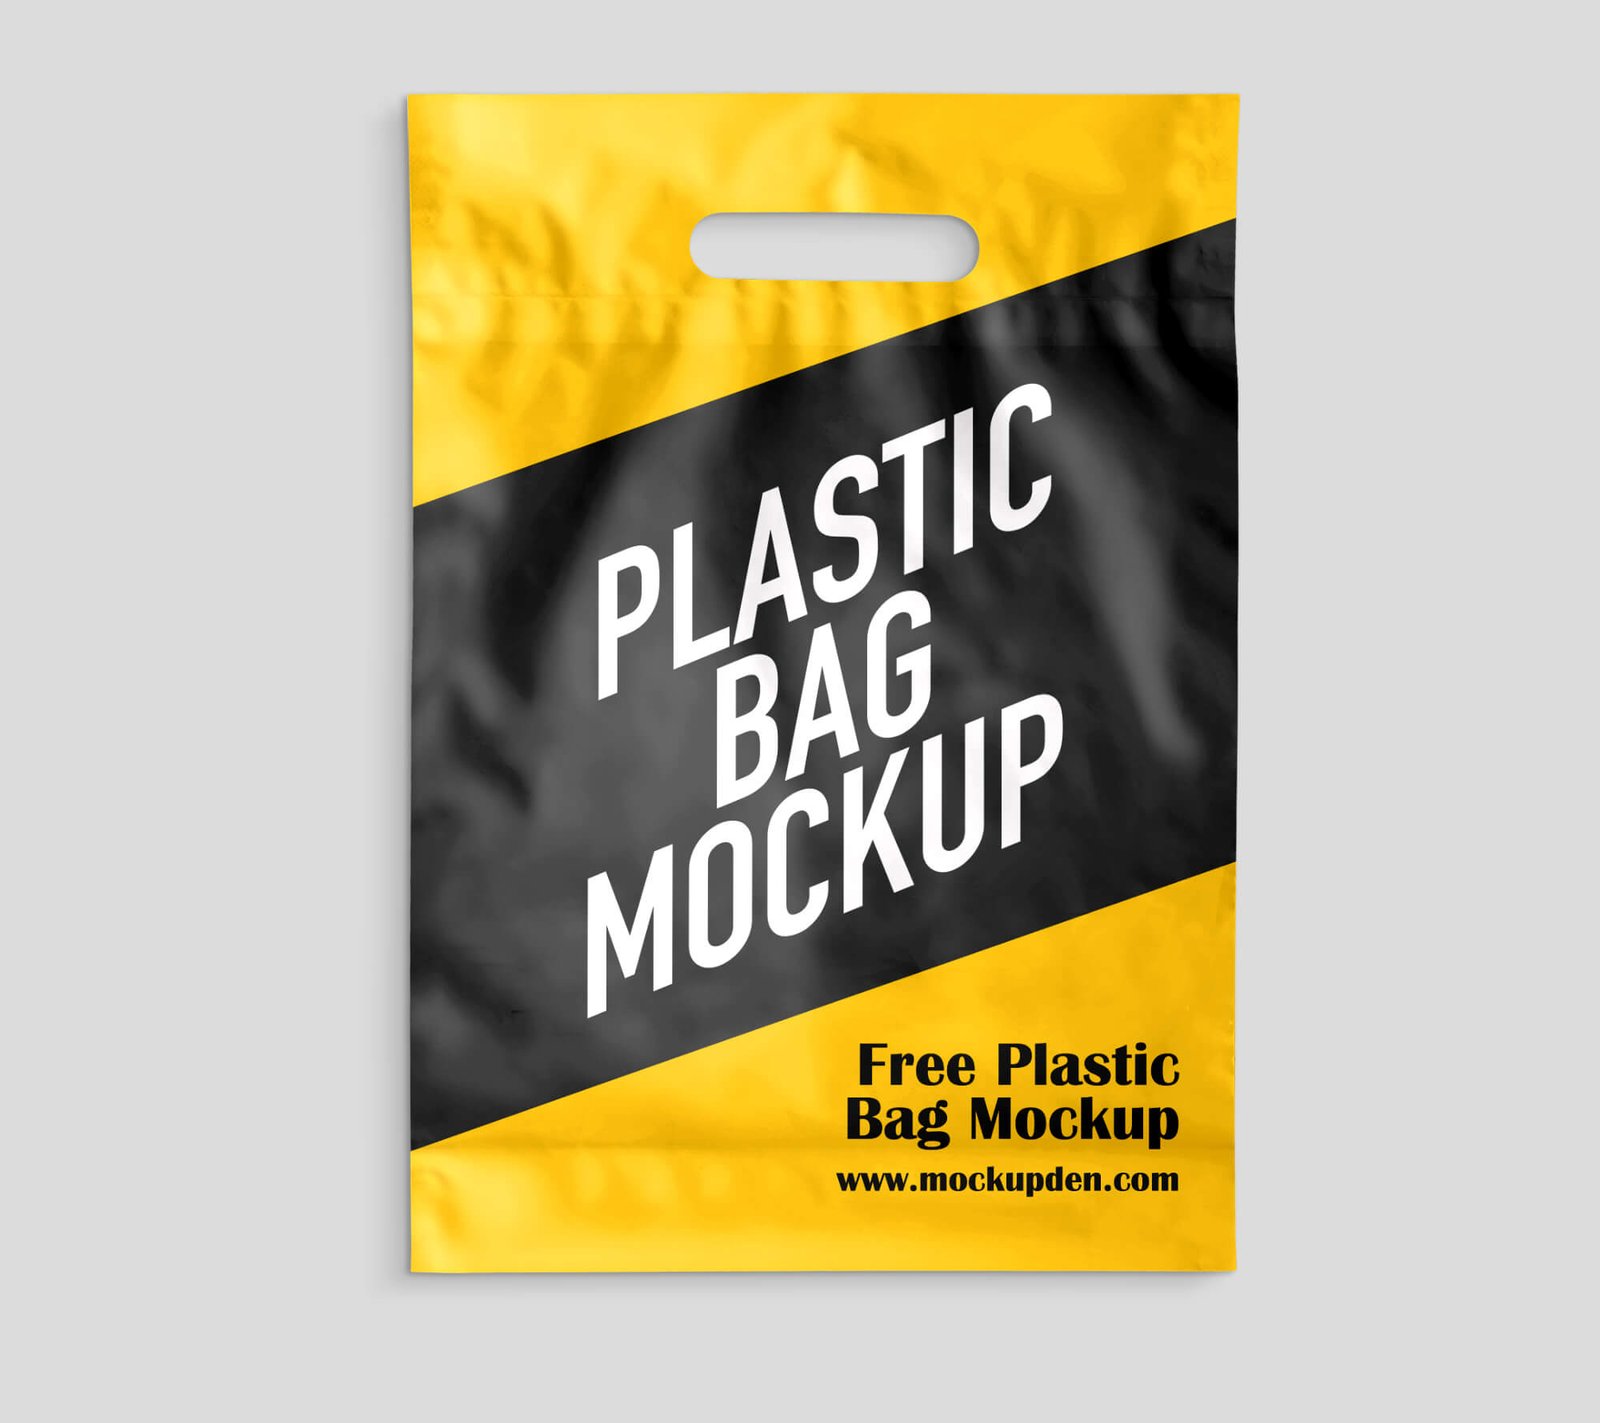 Design Free Plastic Bag Mockup PSD Template